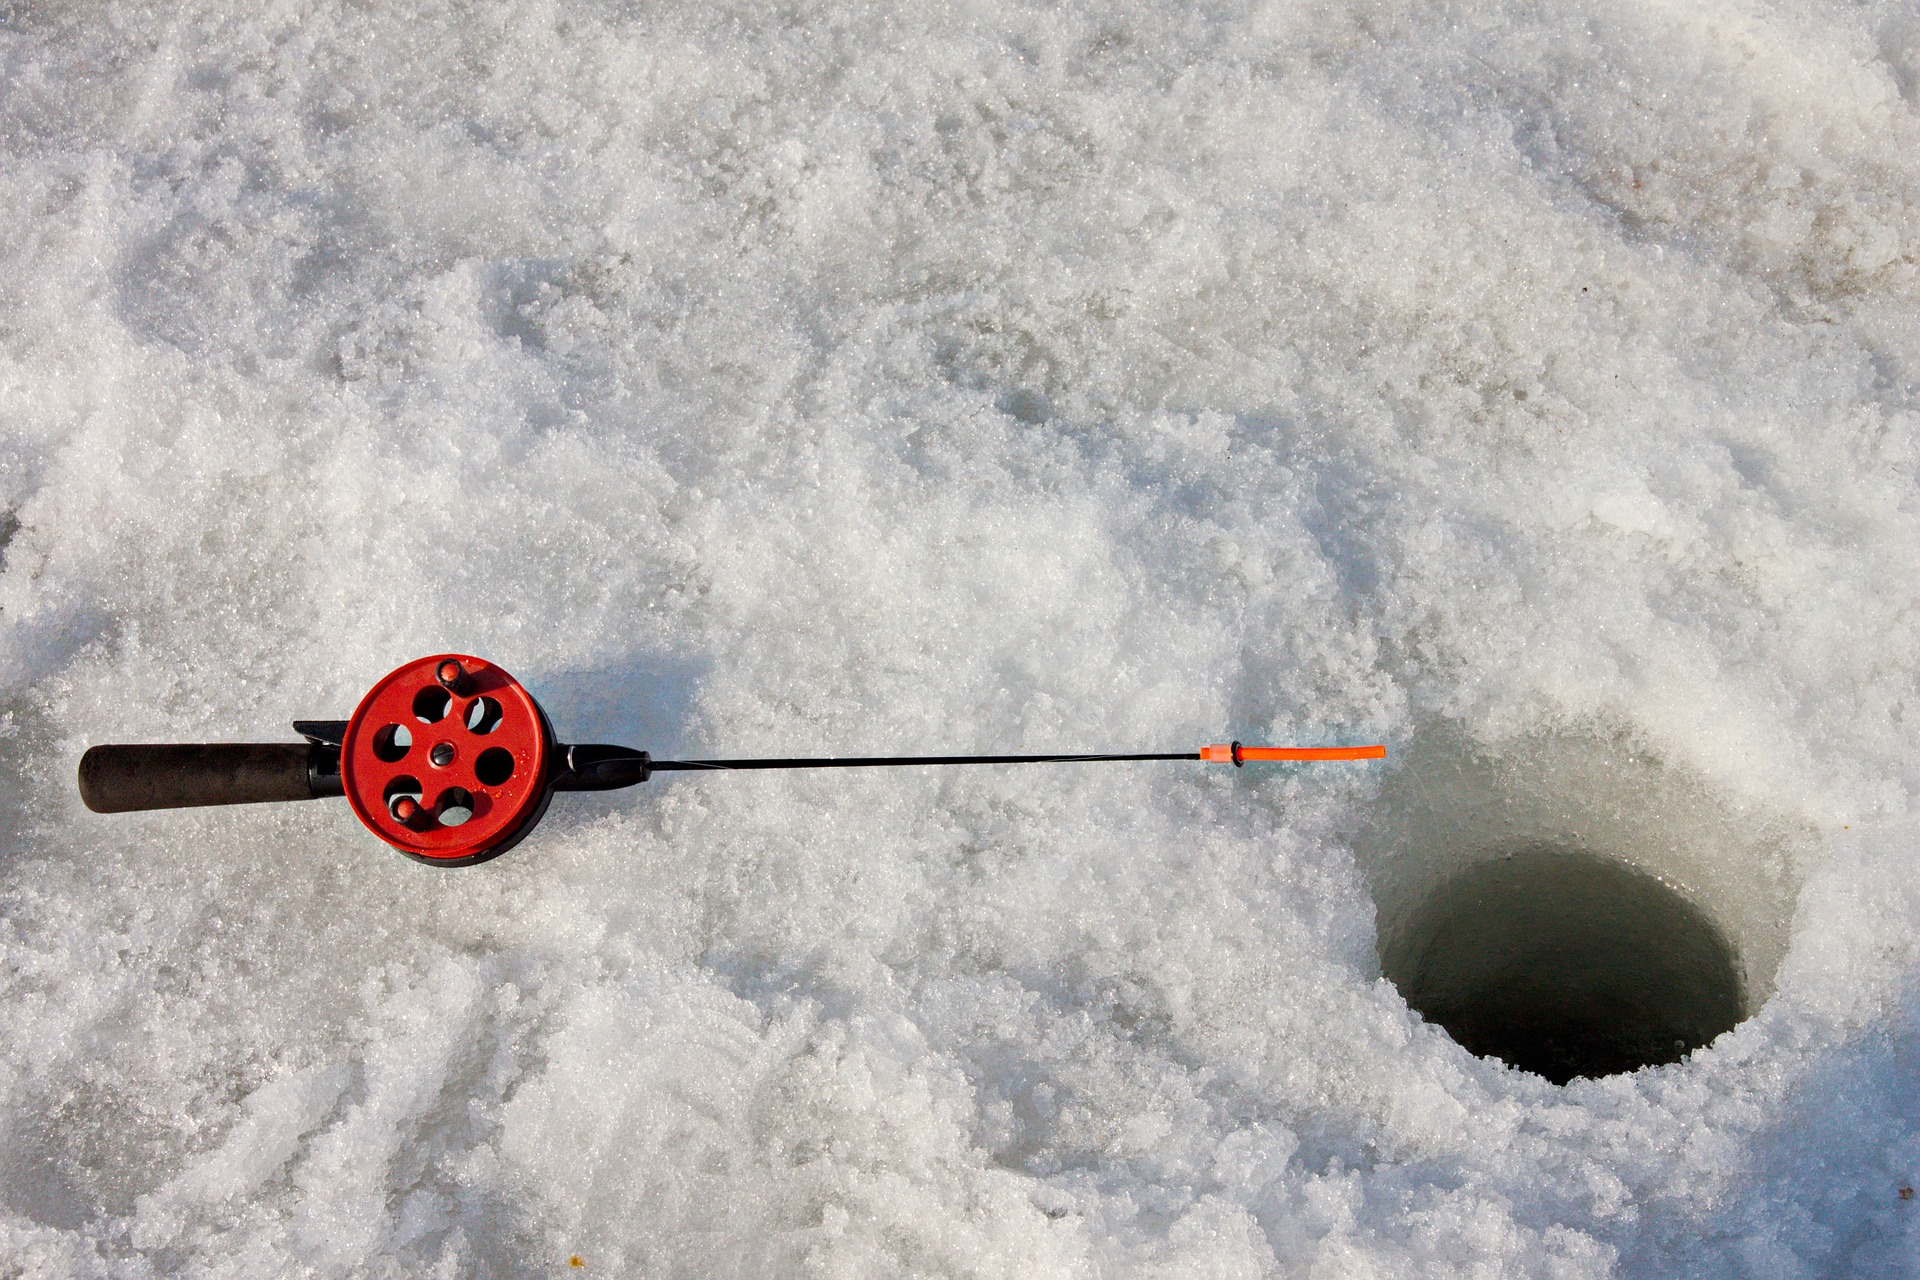 ice fishing pole near hole.